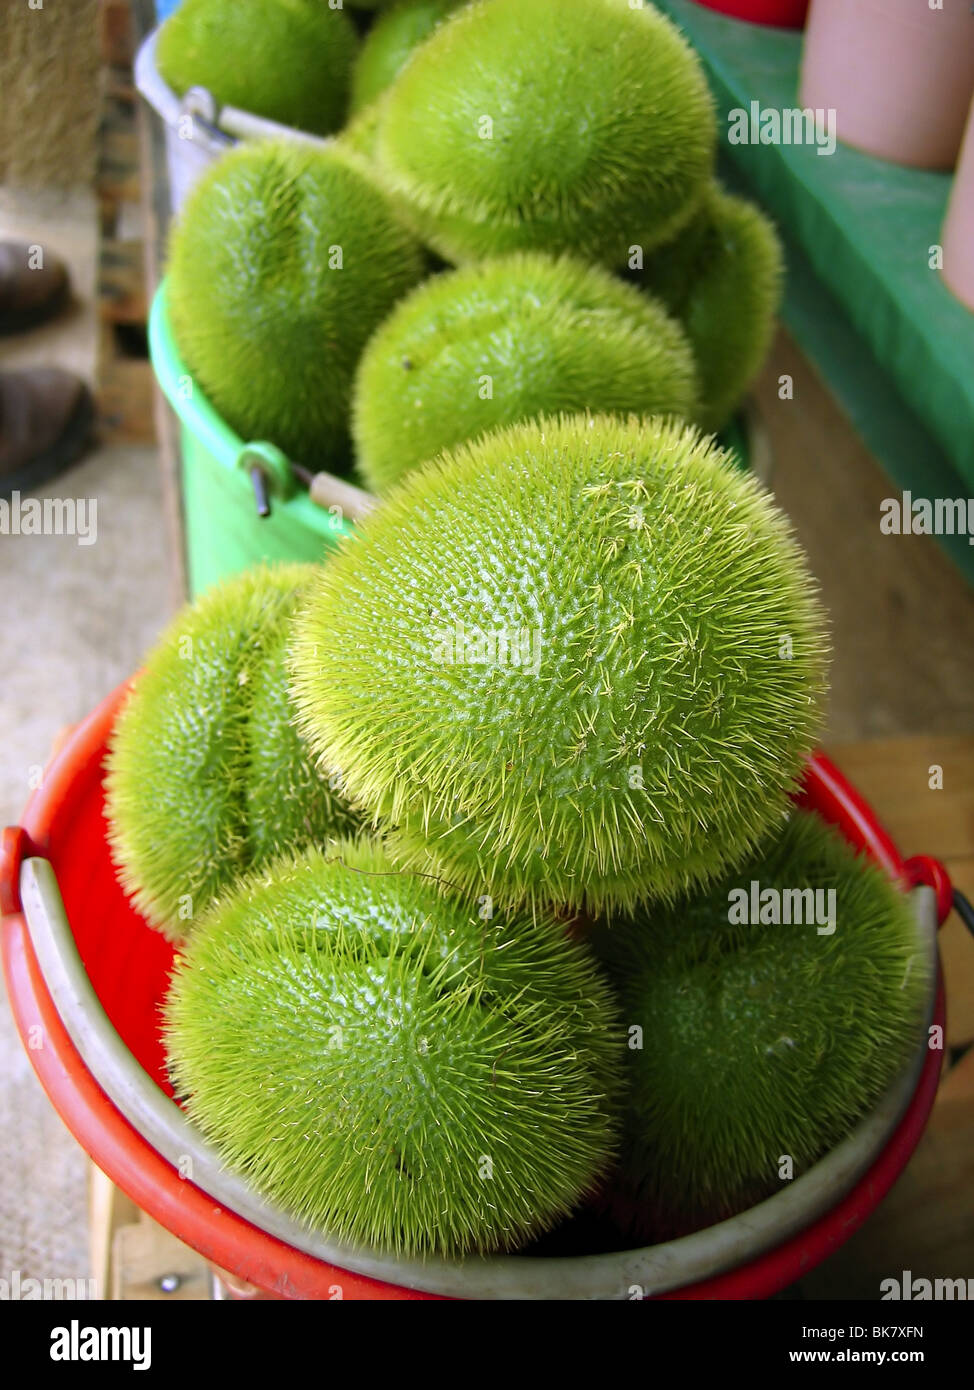 mango squash chayote hair vegetable pear merliton hairy Stock Photo - Alamy